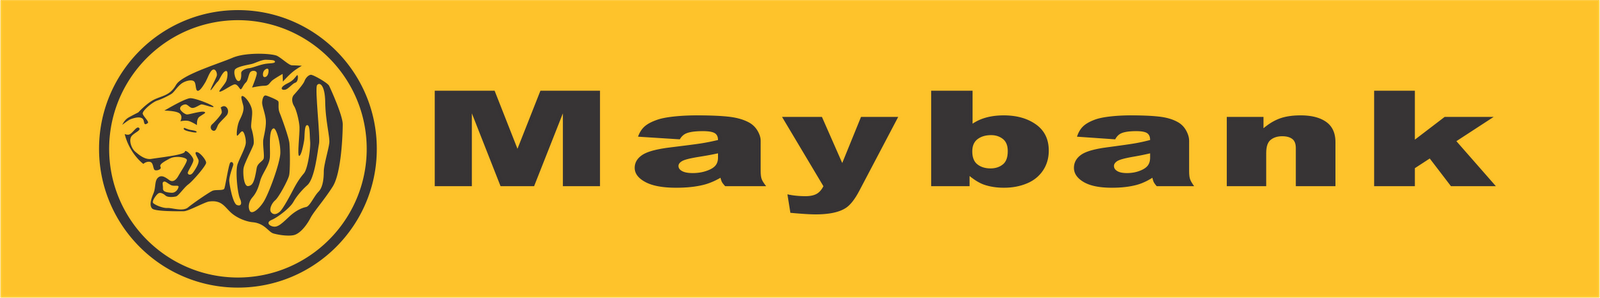 FH Logo: Maybank